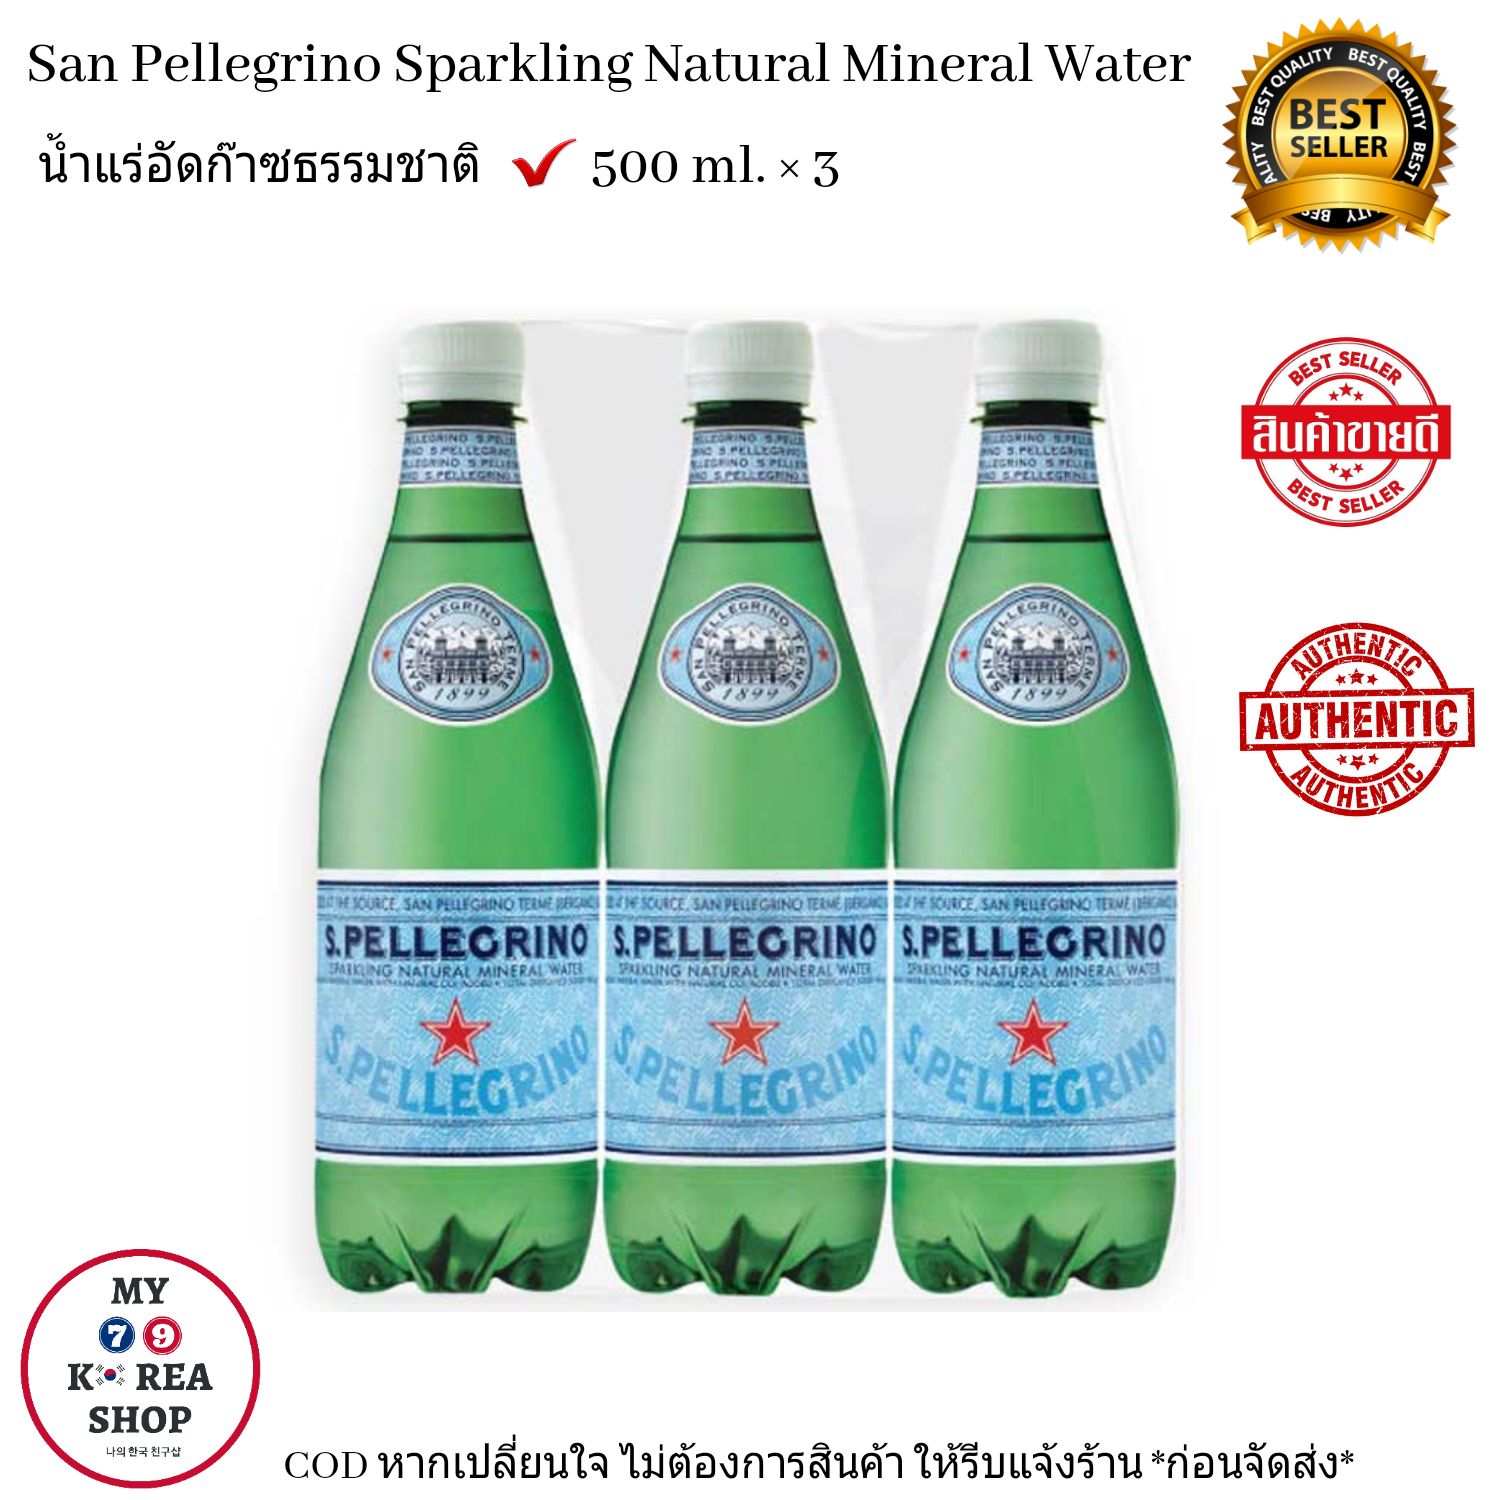 San Pellegrino Sparkling Natural Mineral Water 500 ml x 3 Bottlesน้ำแร่อัดก๊าซธรรมชาติ